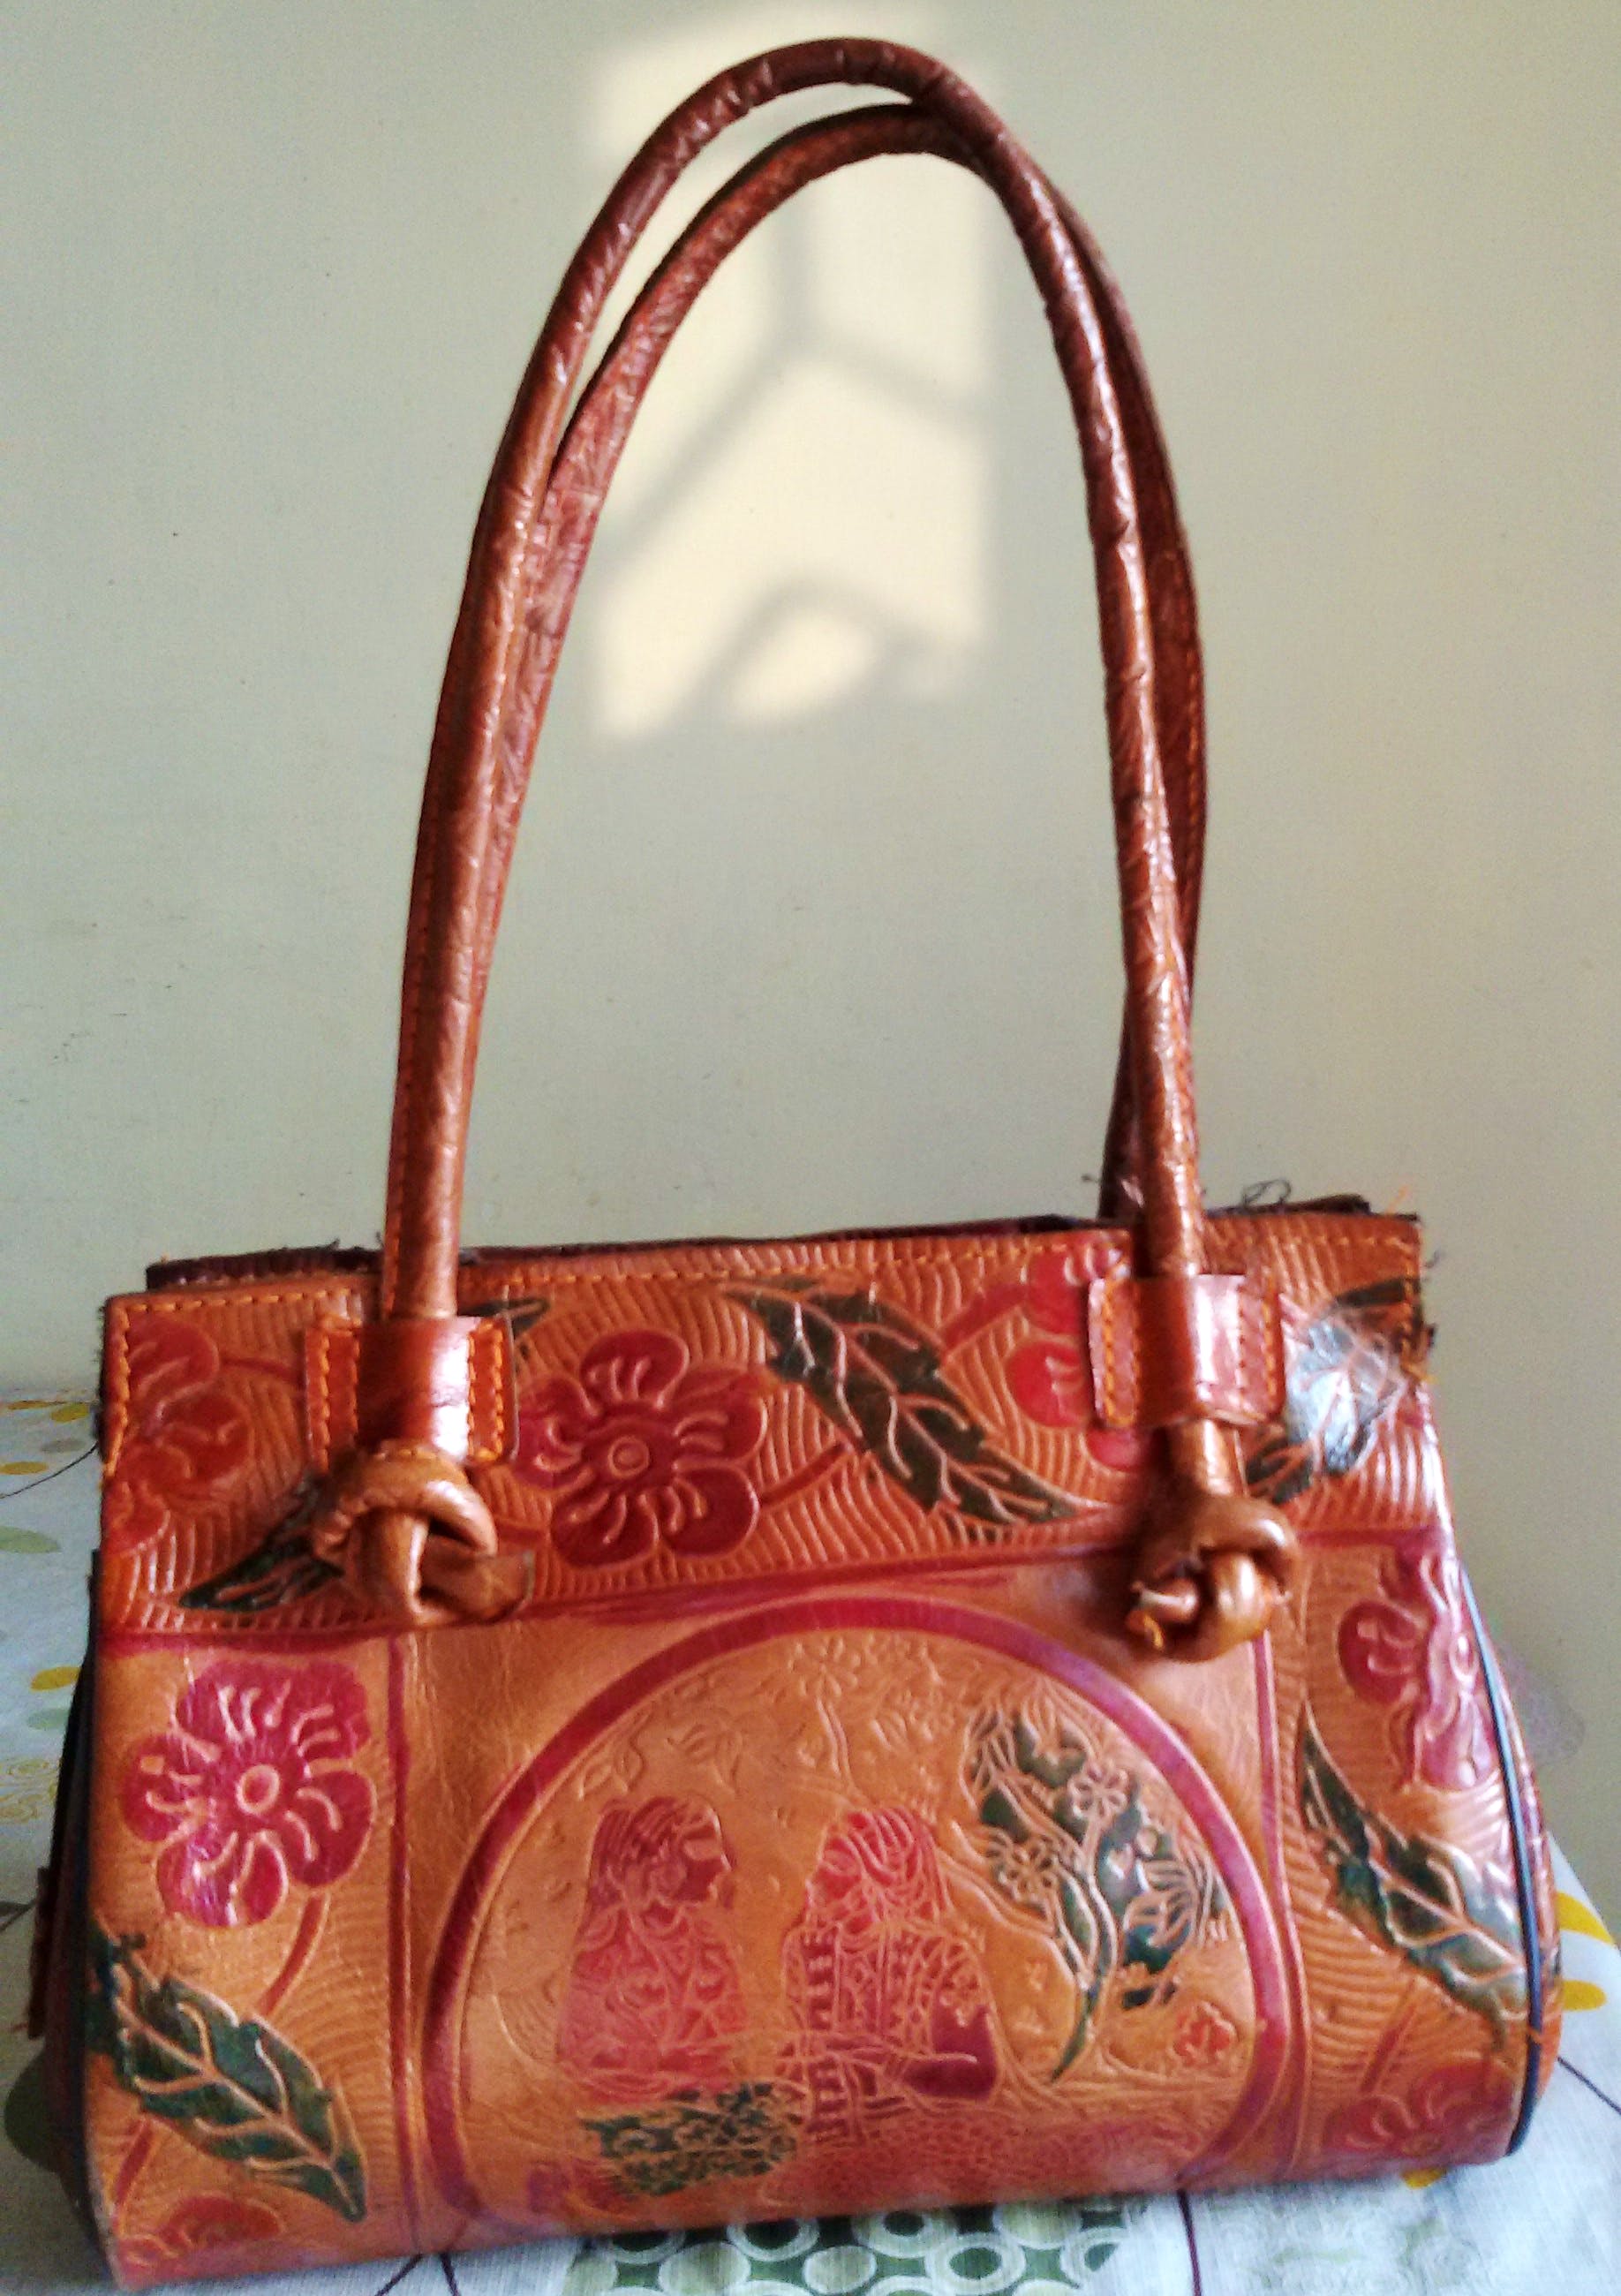 Handbag,Bag,Shoulder bag,Fashion accessory,Pink,Brown,Beauty,Leather,Design,Material property